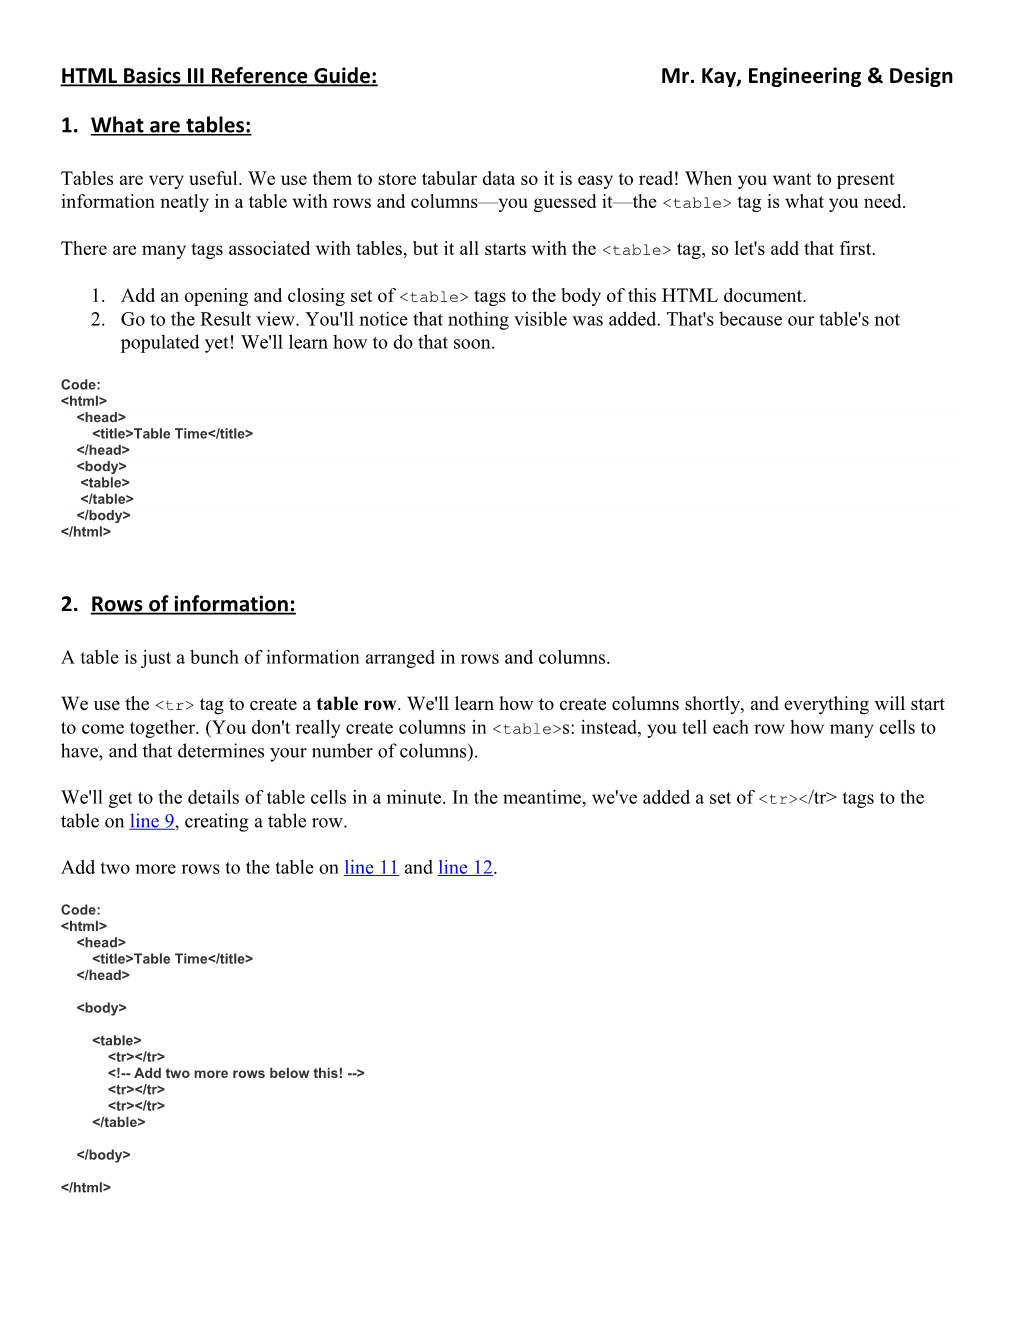 HTML Basics I & II Reference Guide